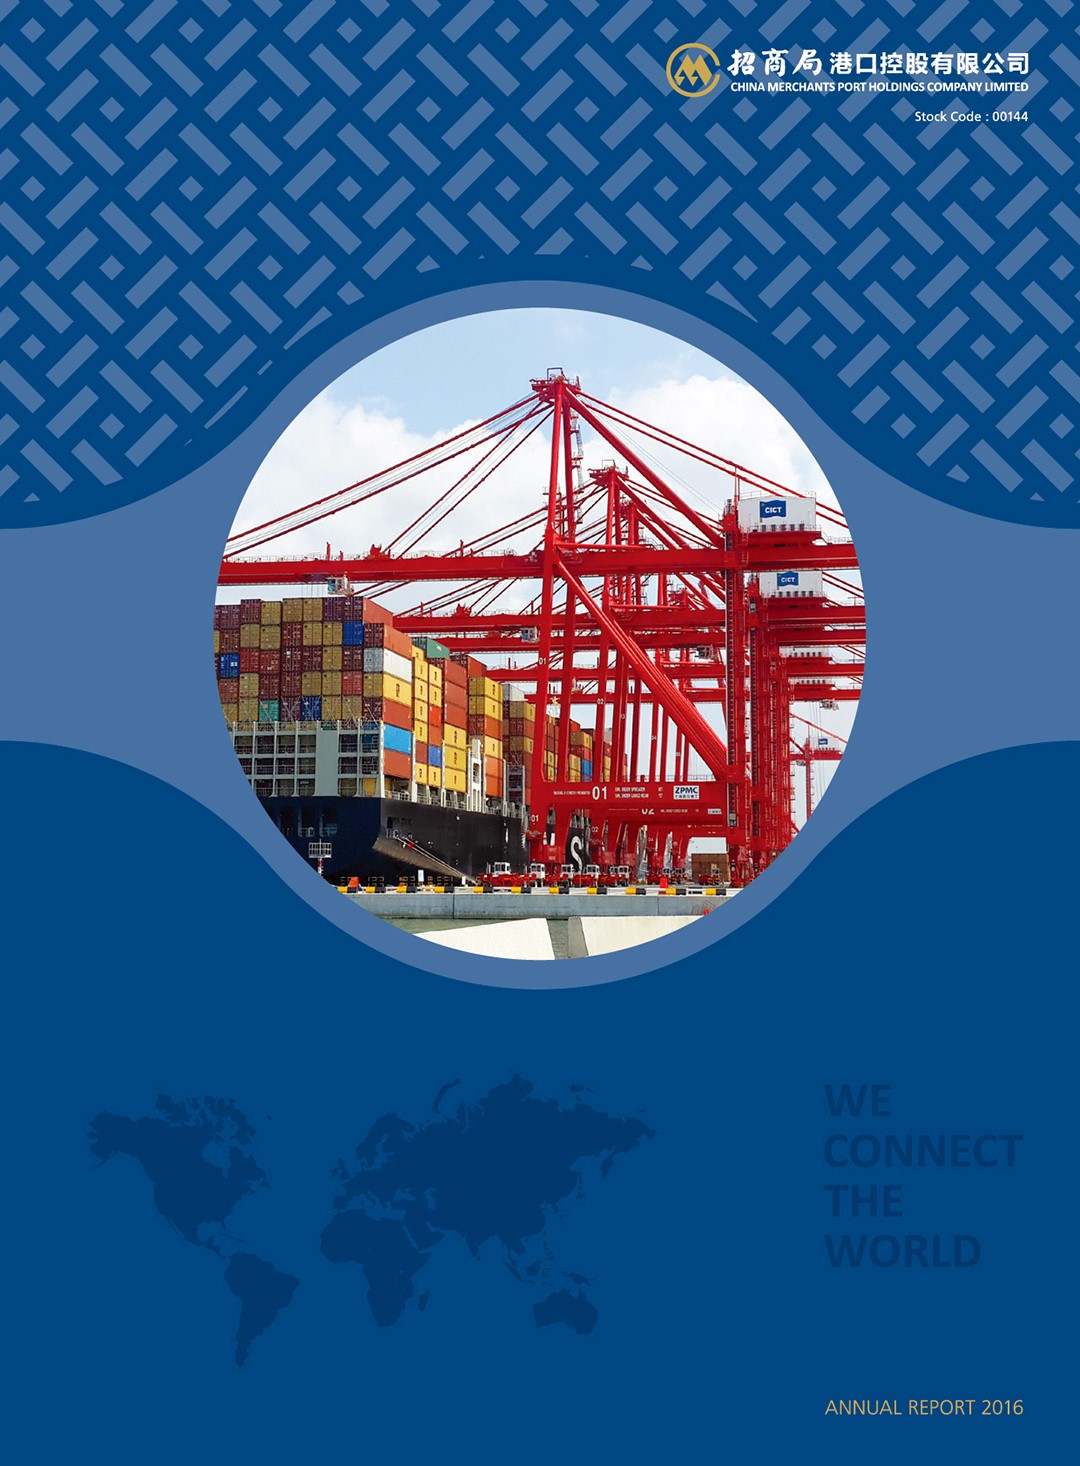 China Merchants Port Holdings Company Limited